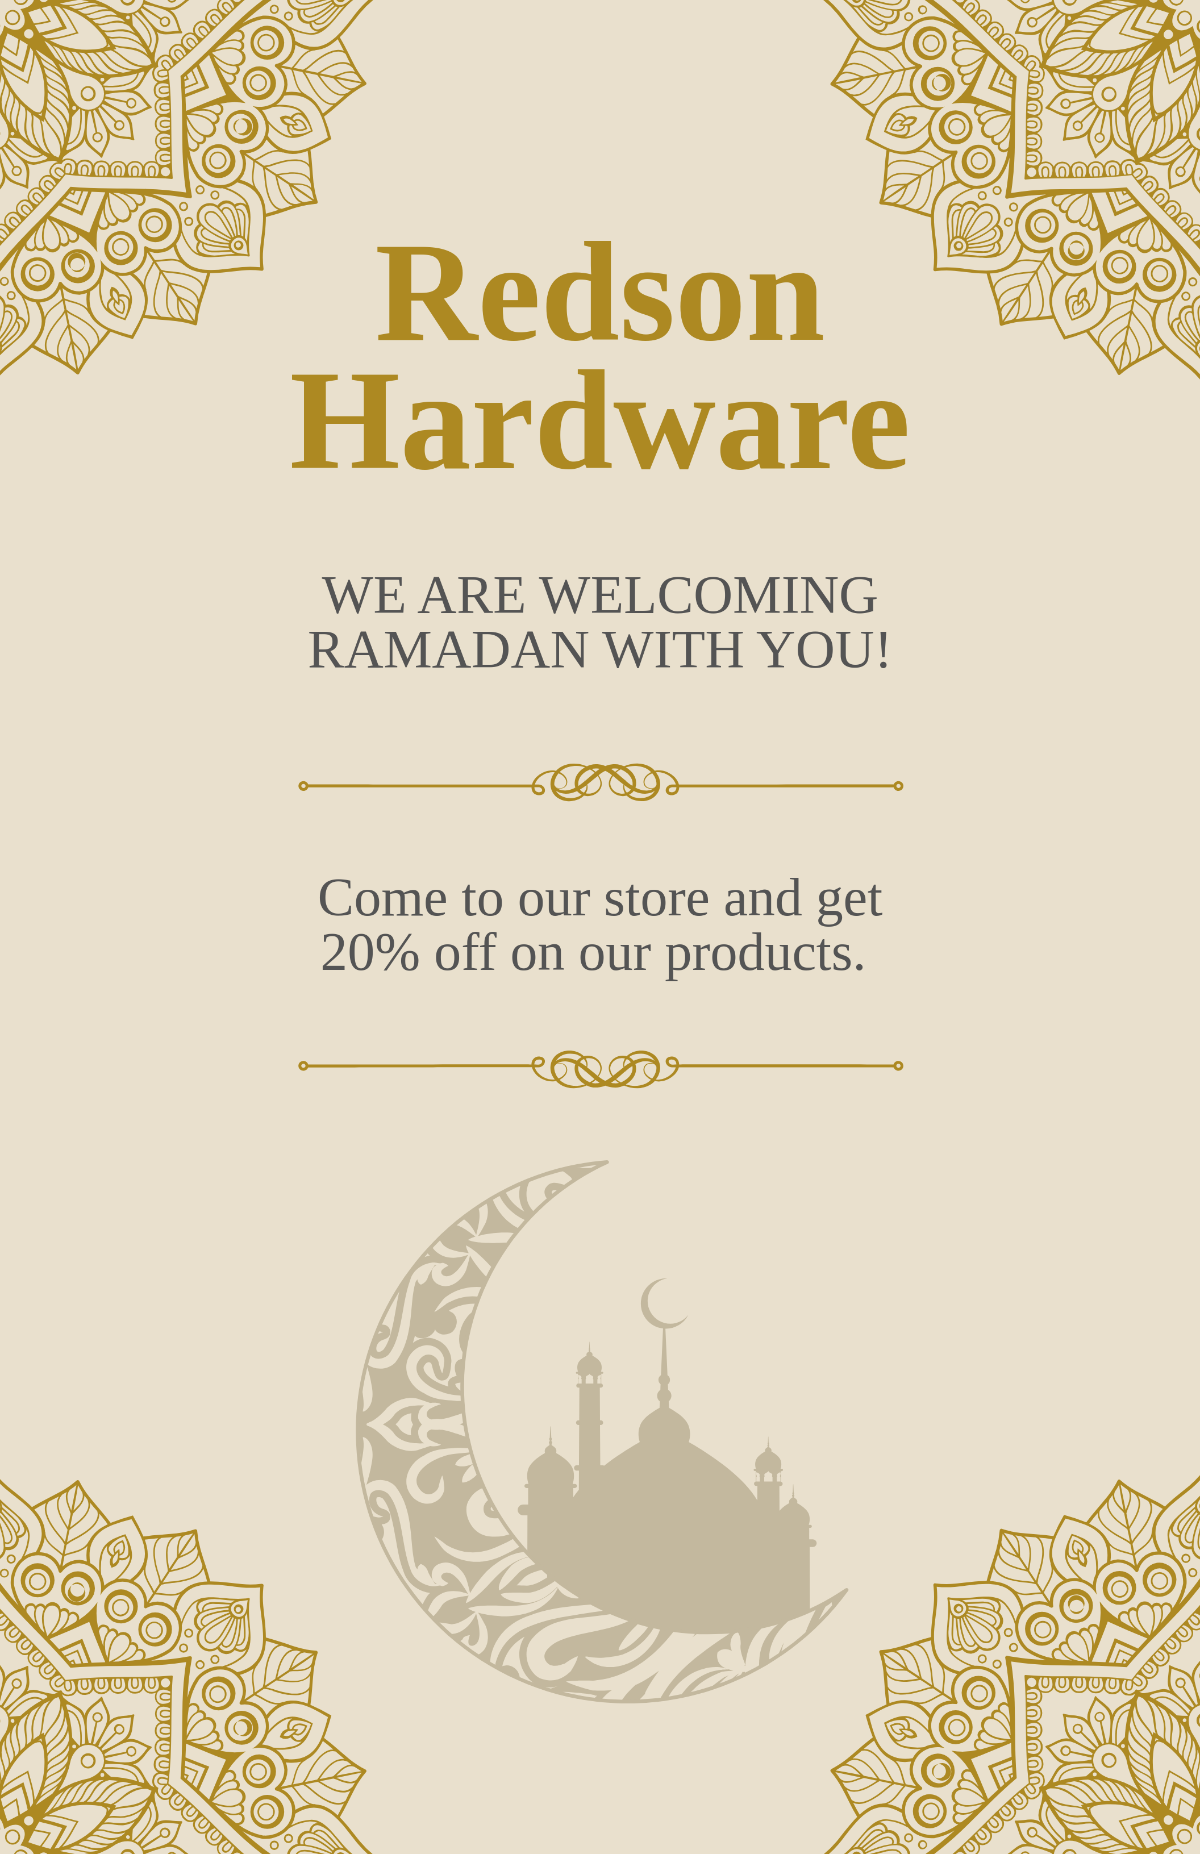 Free Welcome Ramadan Poster Template